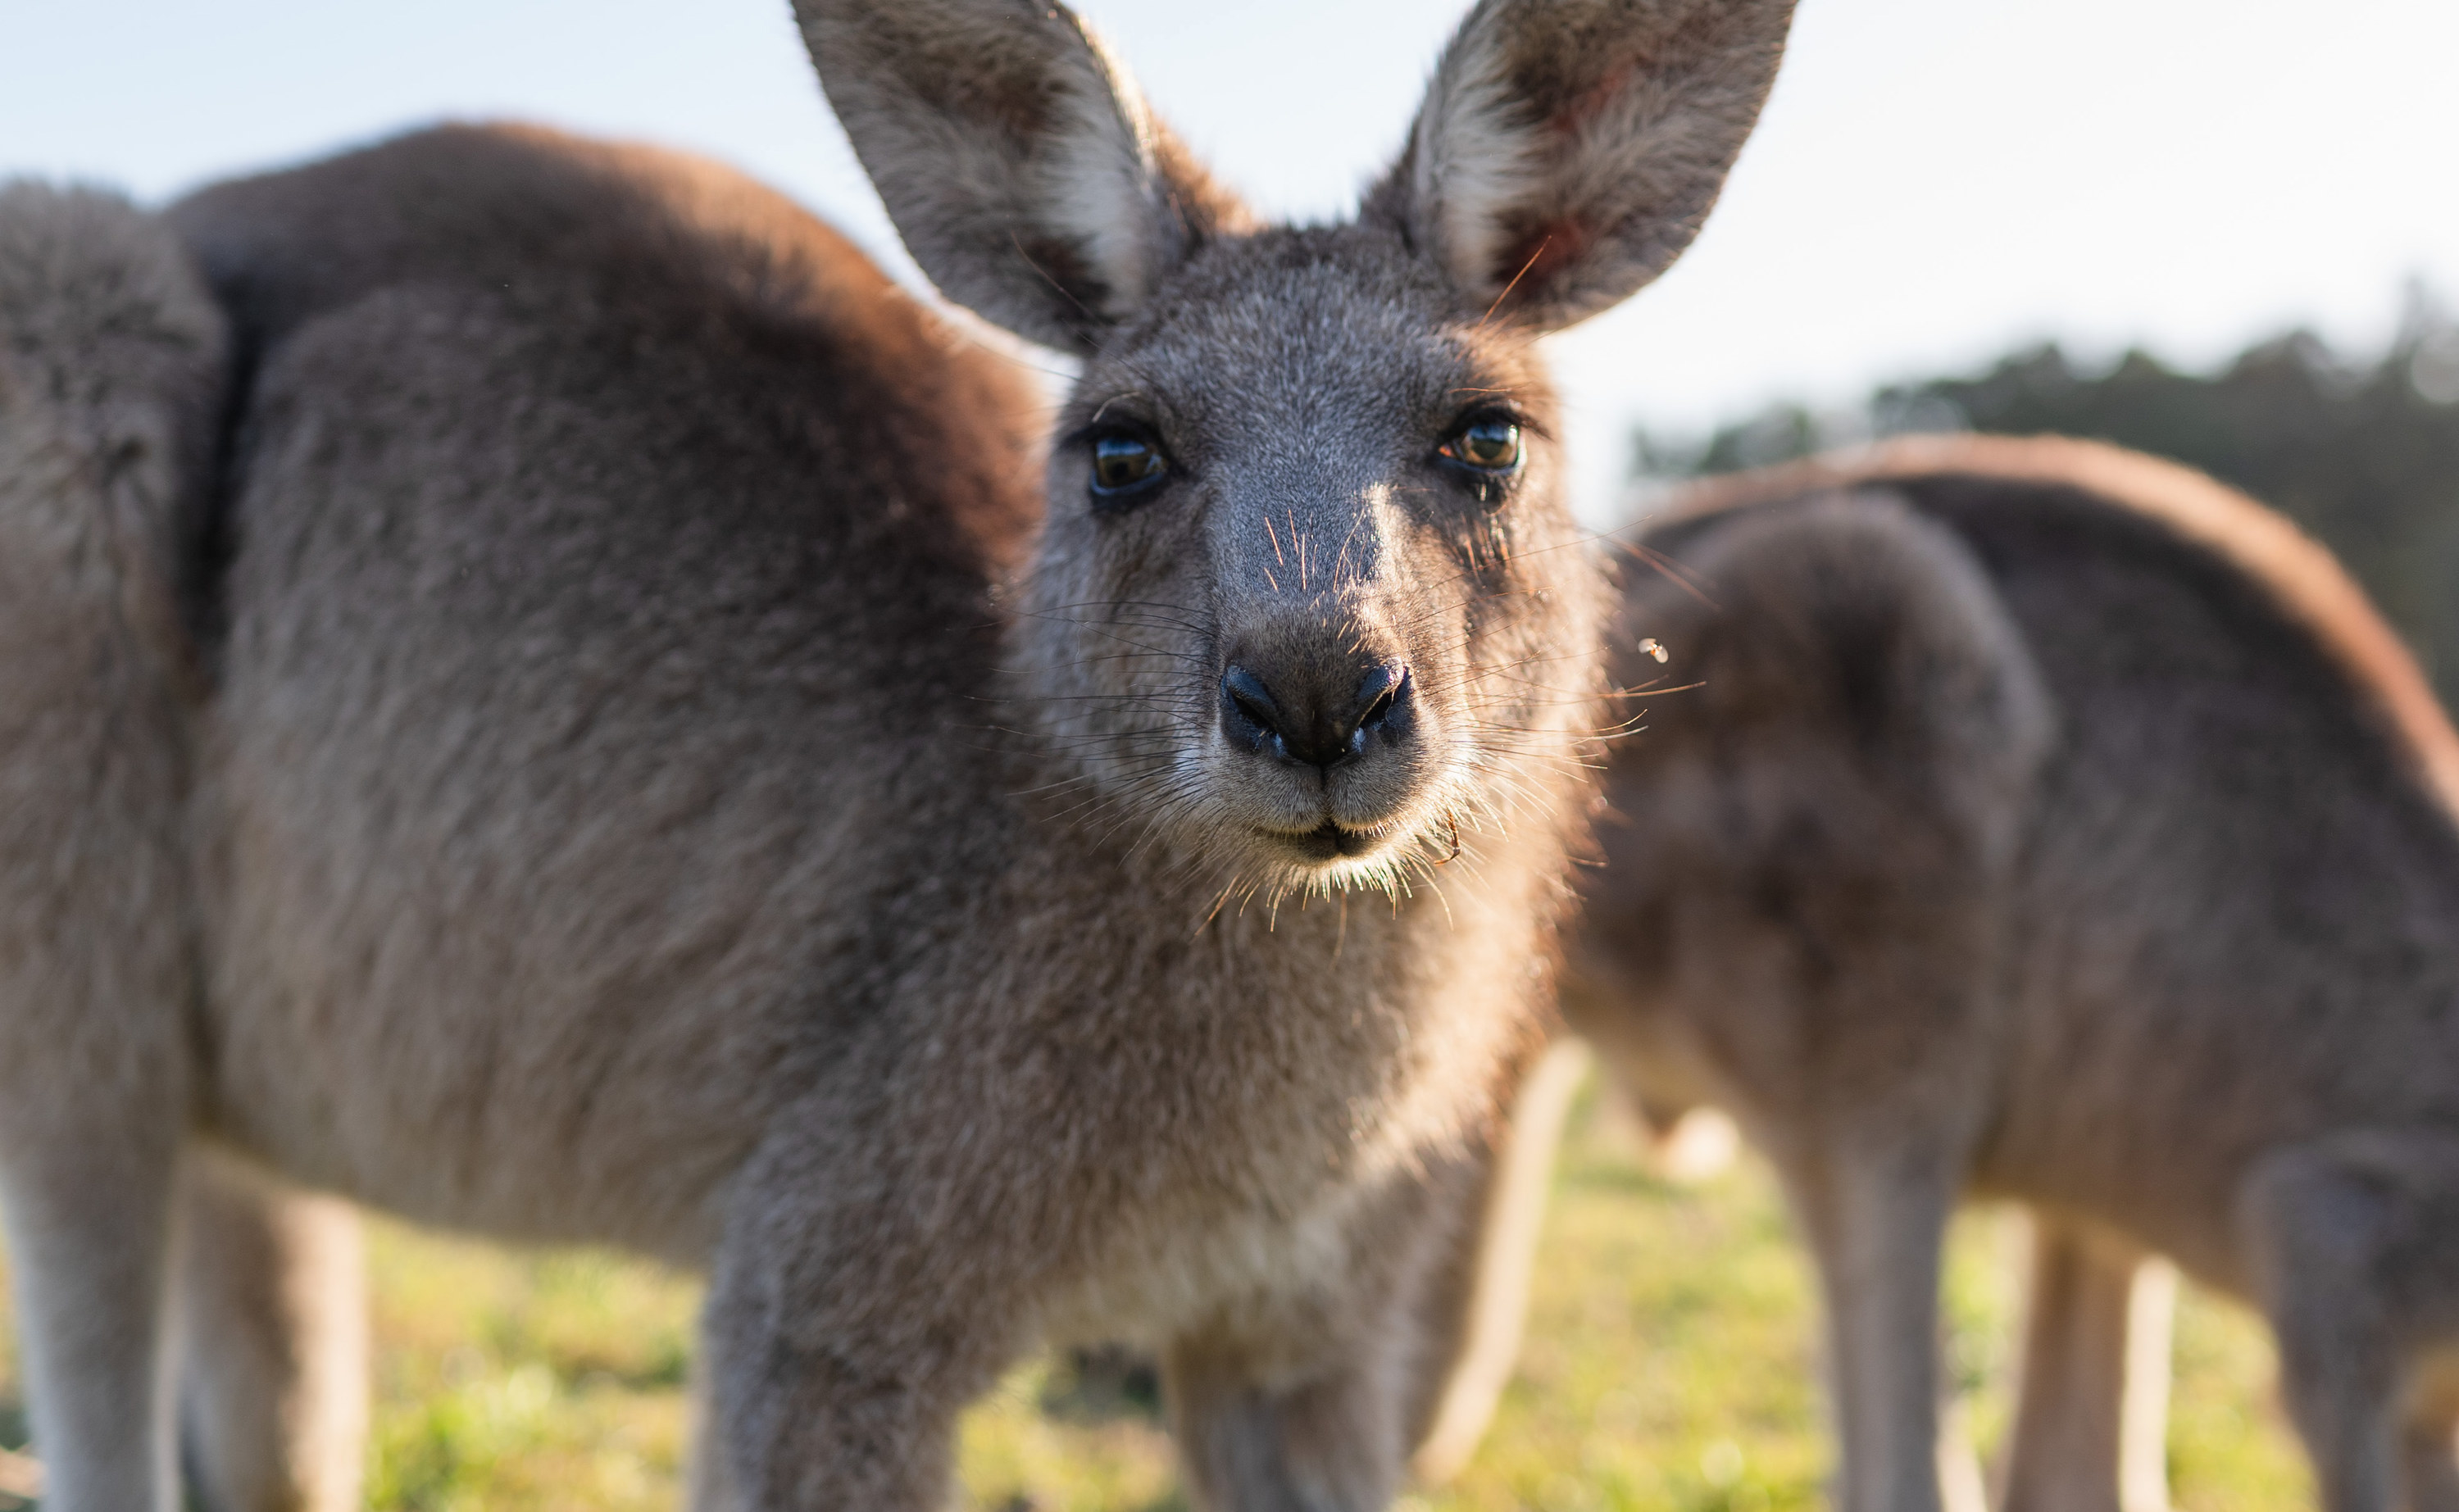 A closeup of a kangaroo looking at the camera